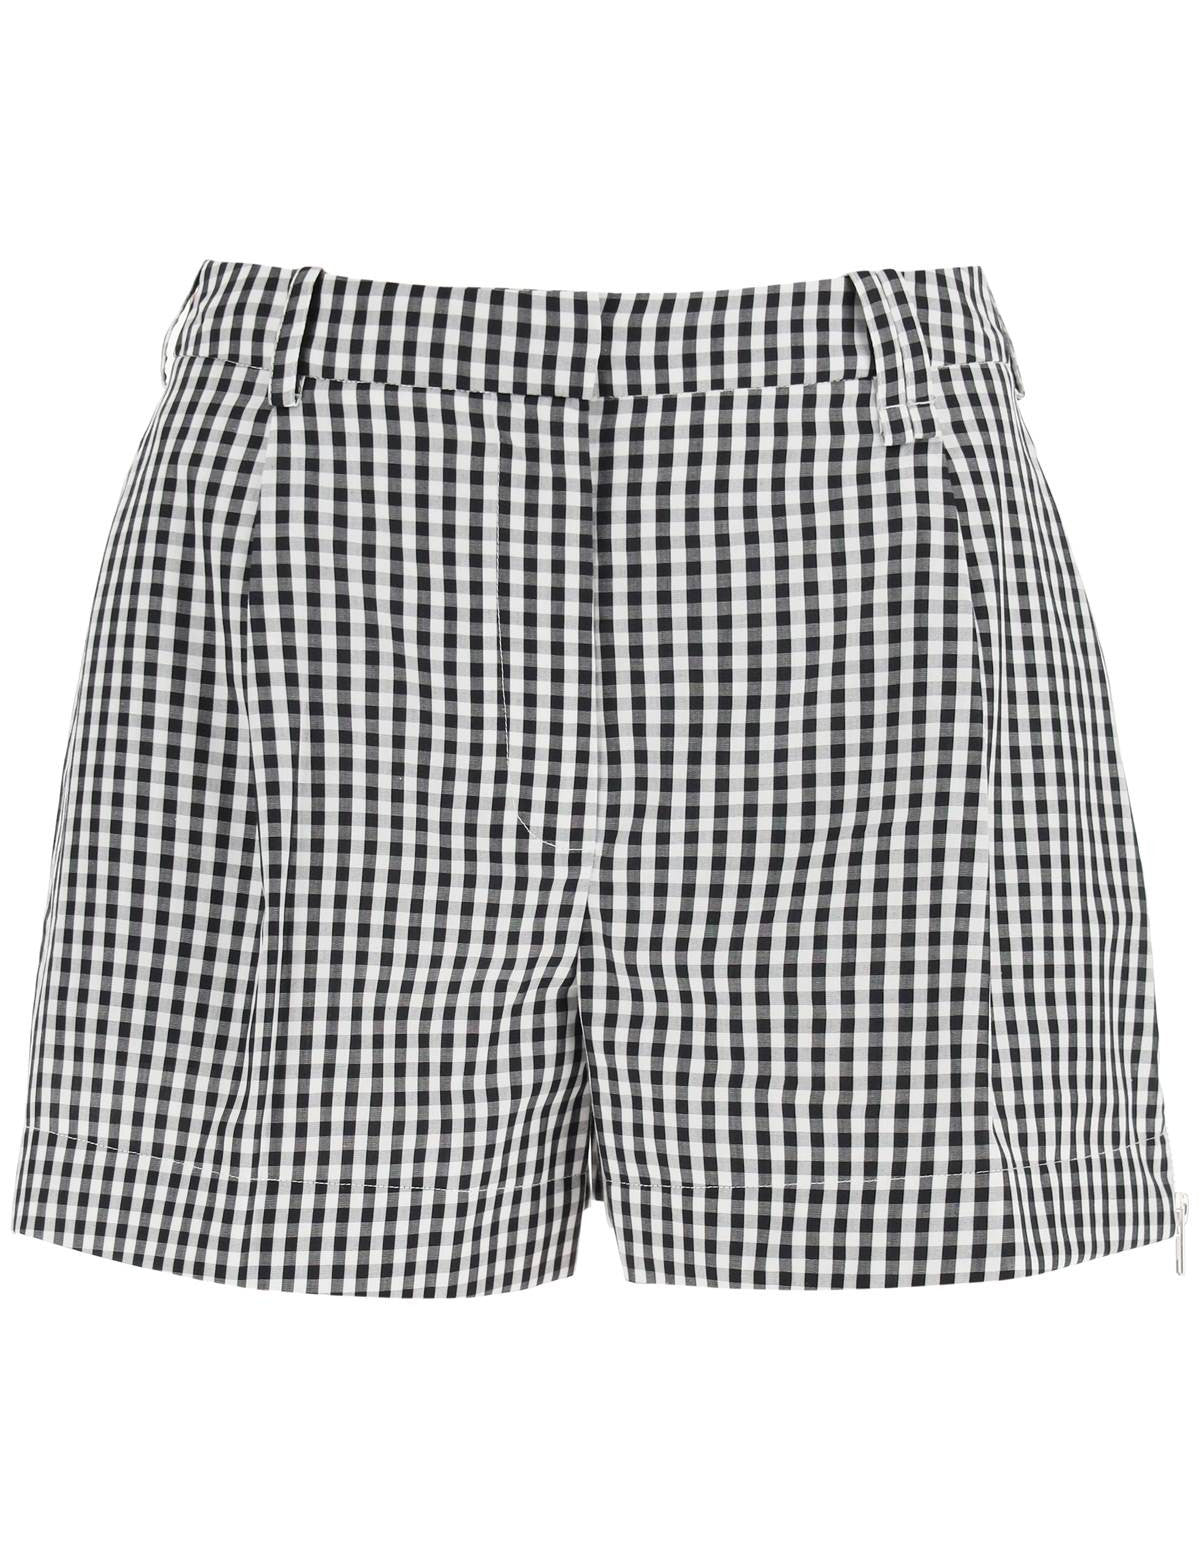 simone-rocha-gingham-cotton-shorts.jpg